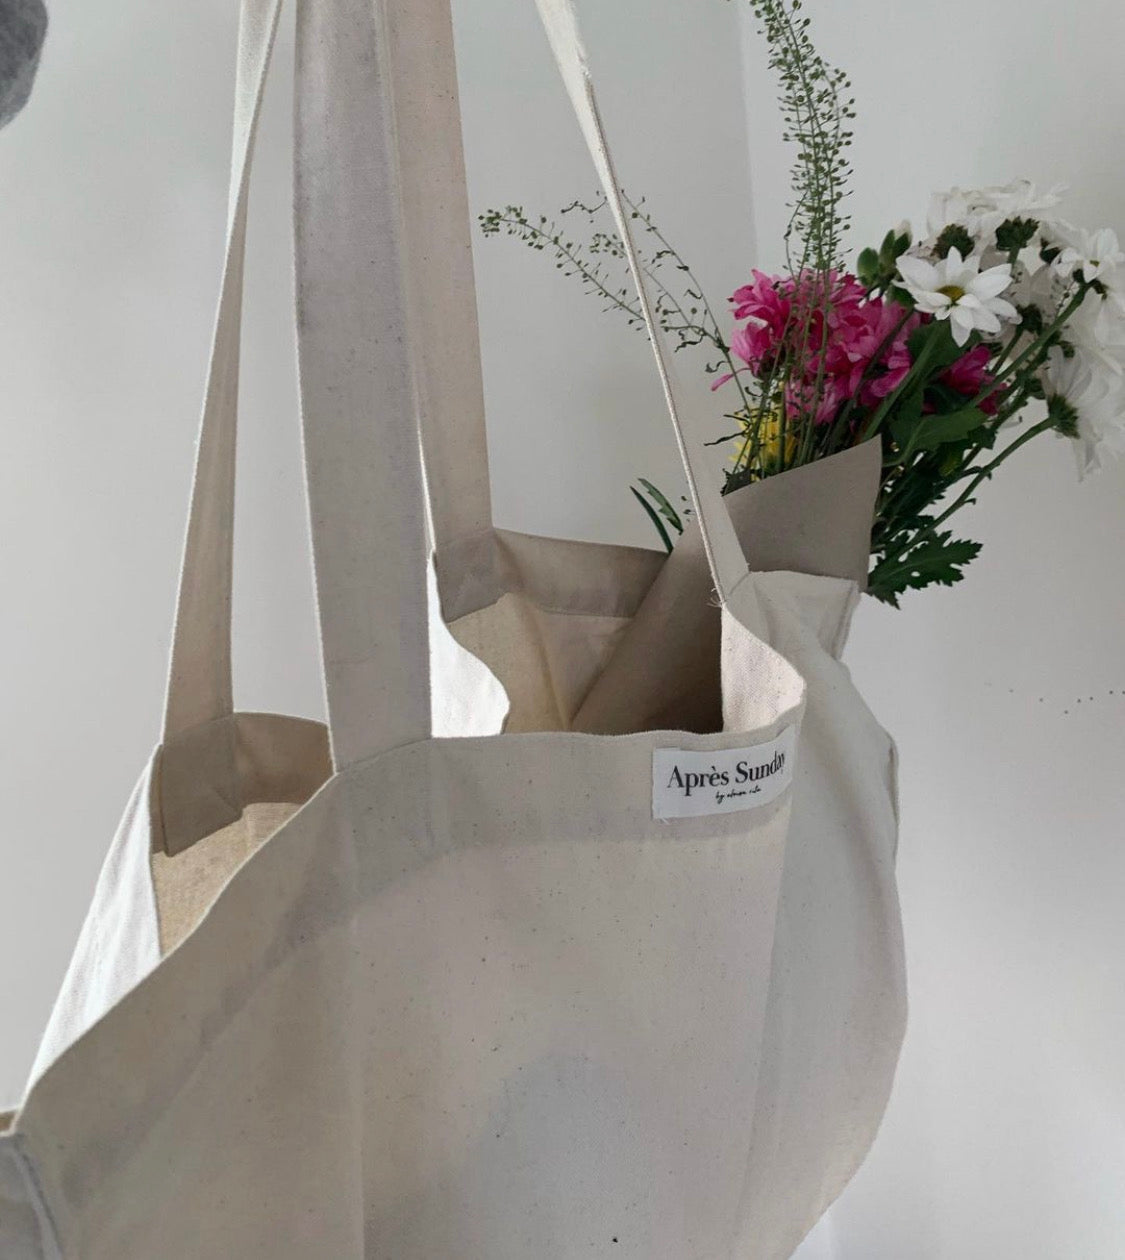 Sunday Shopper Tote Bag – Après Sunday